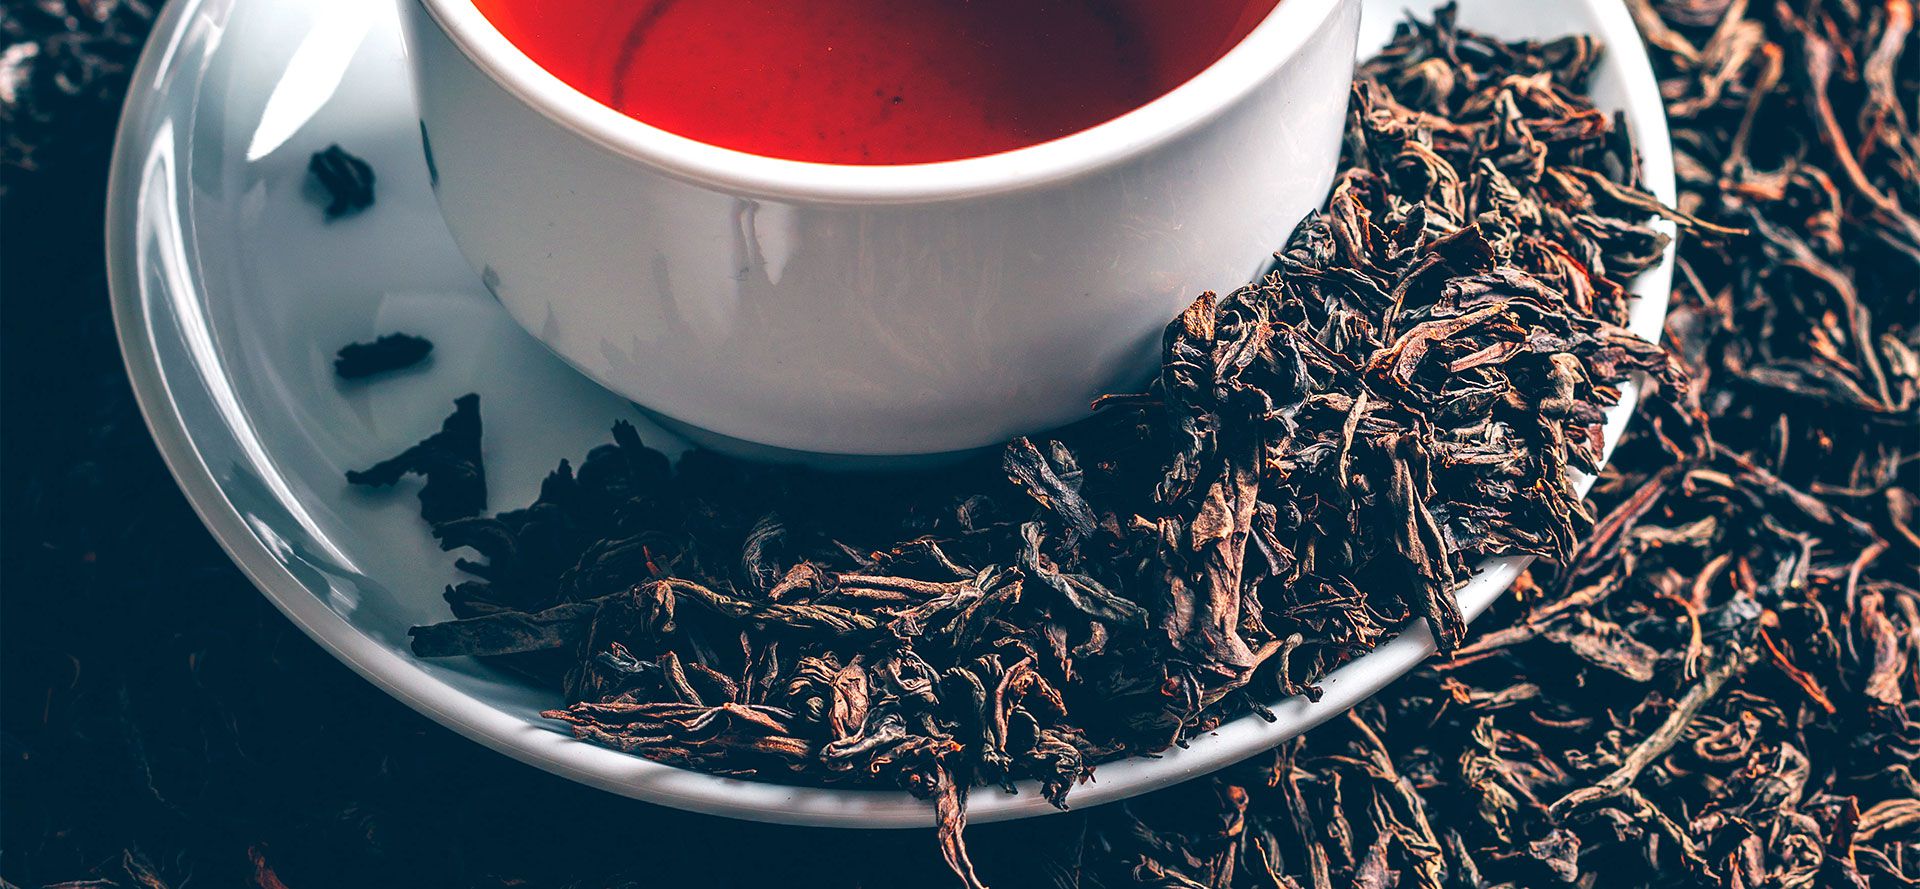 Darjeeling Black Loose Leaf Tea.